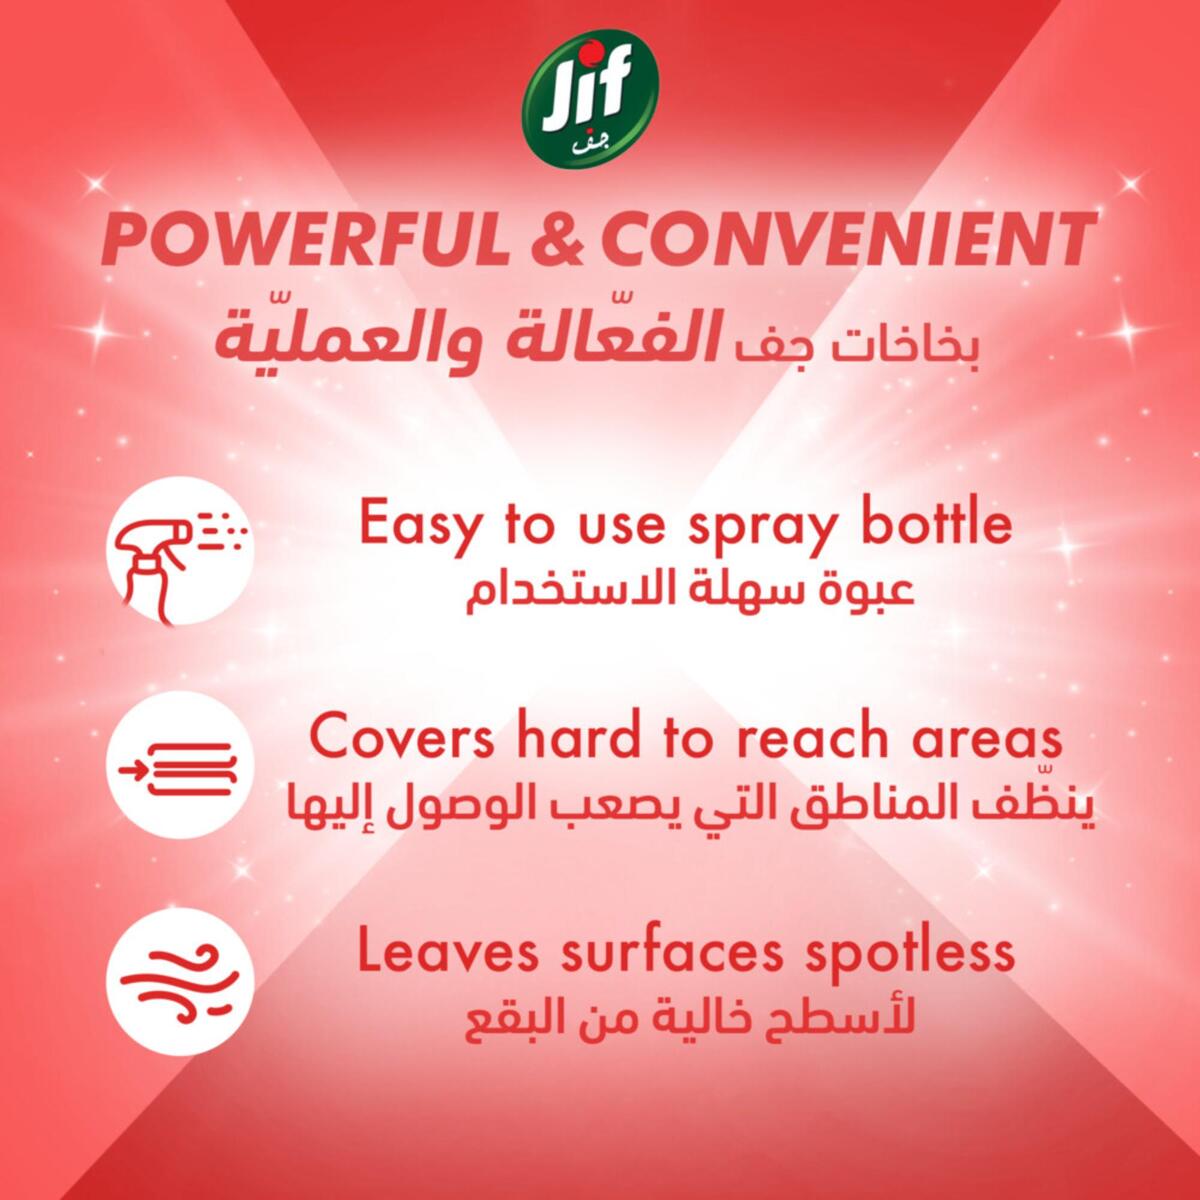 Jif Ultra Fast Cleaner Spray Everywhere 500 ml